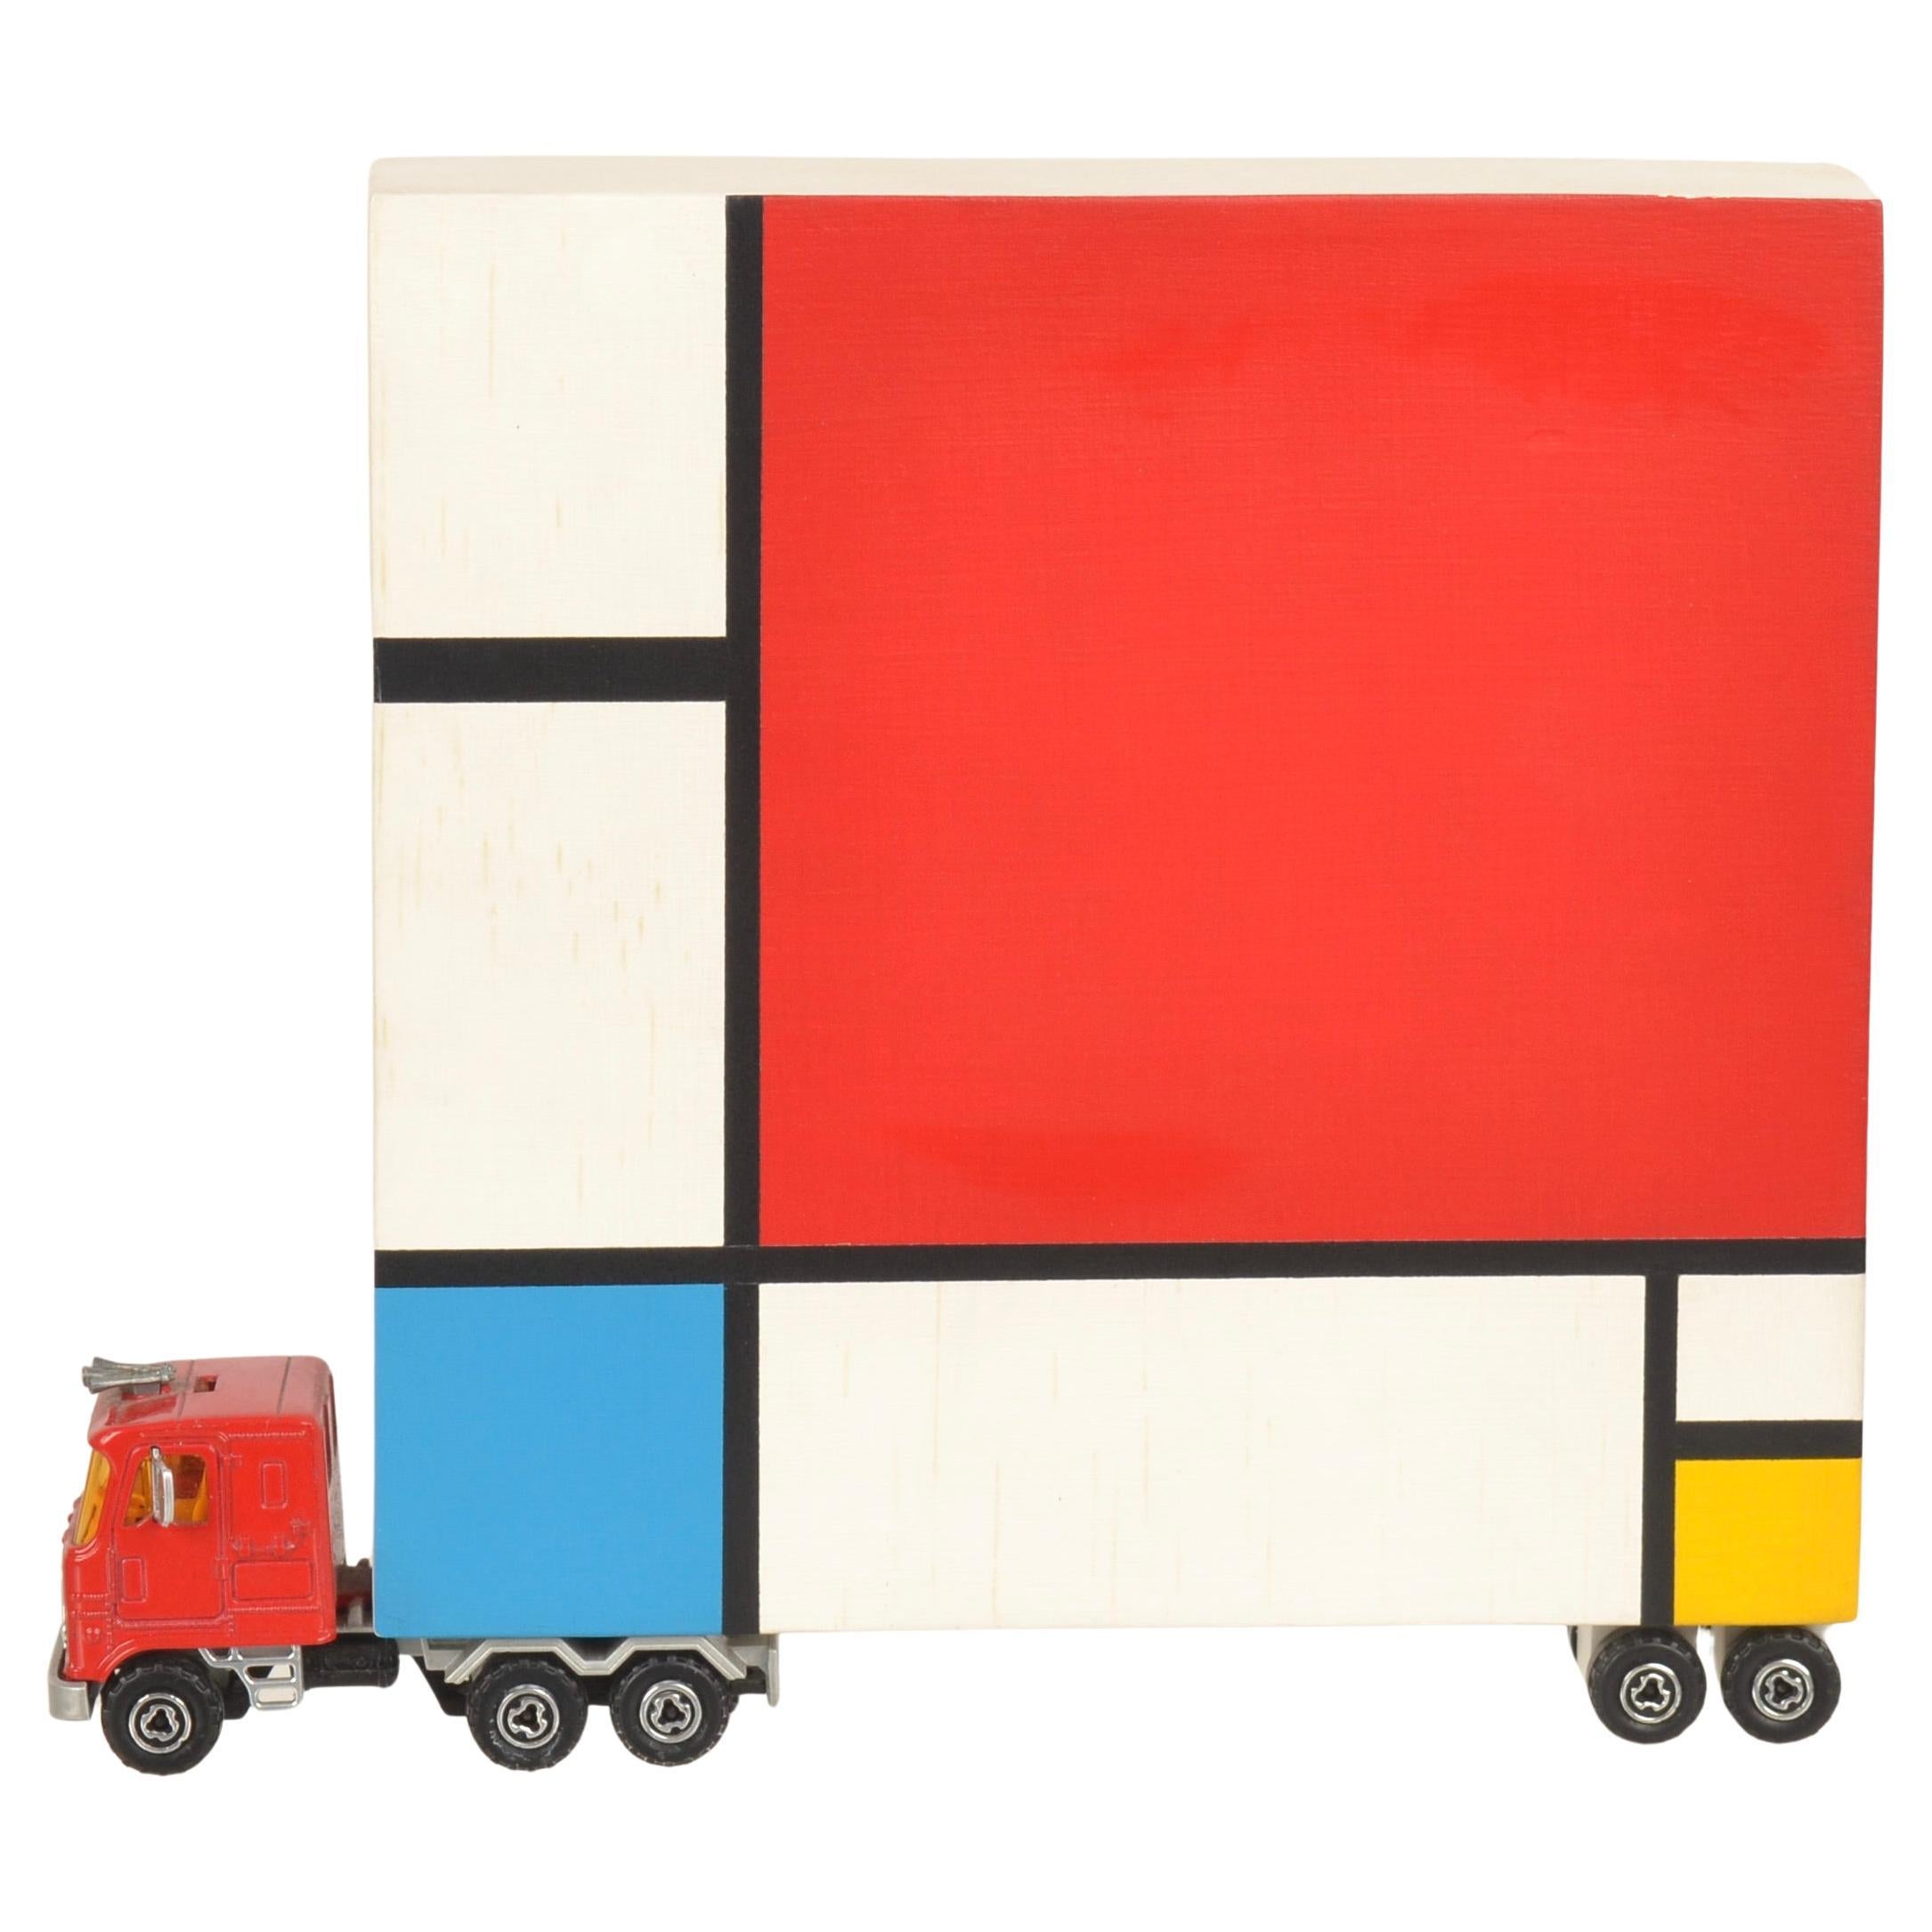 "Mondrian Truck" by Bruce Houston, USA, 1989